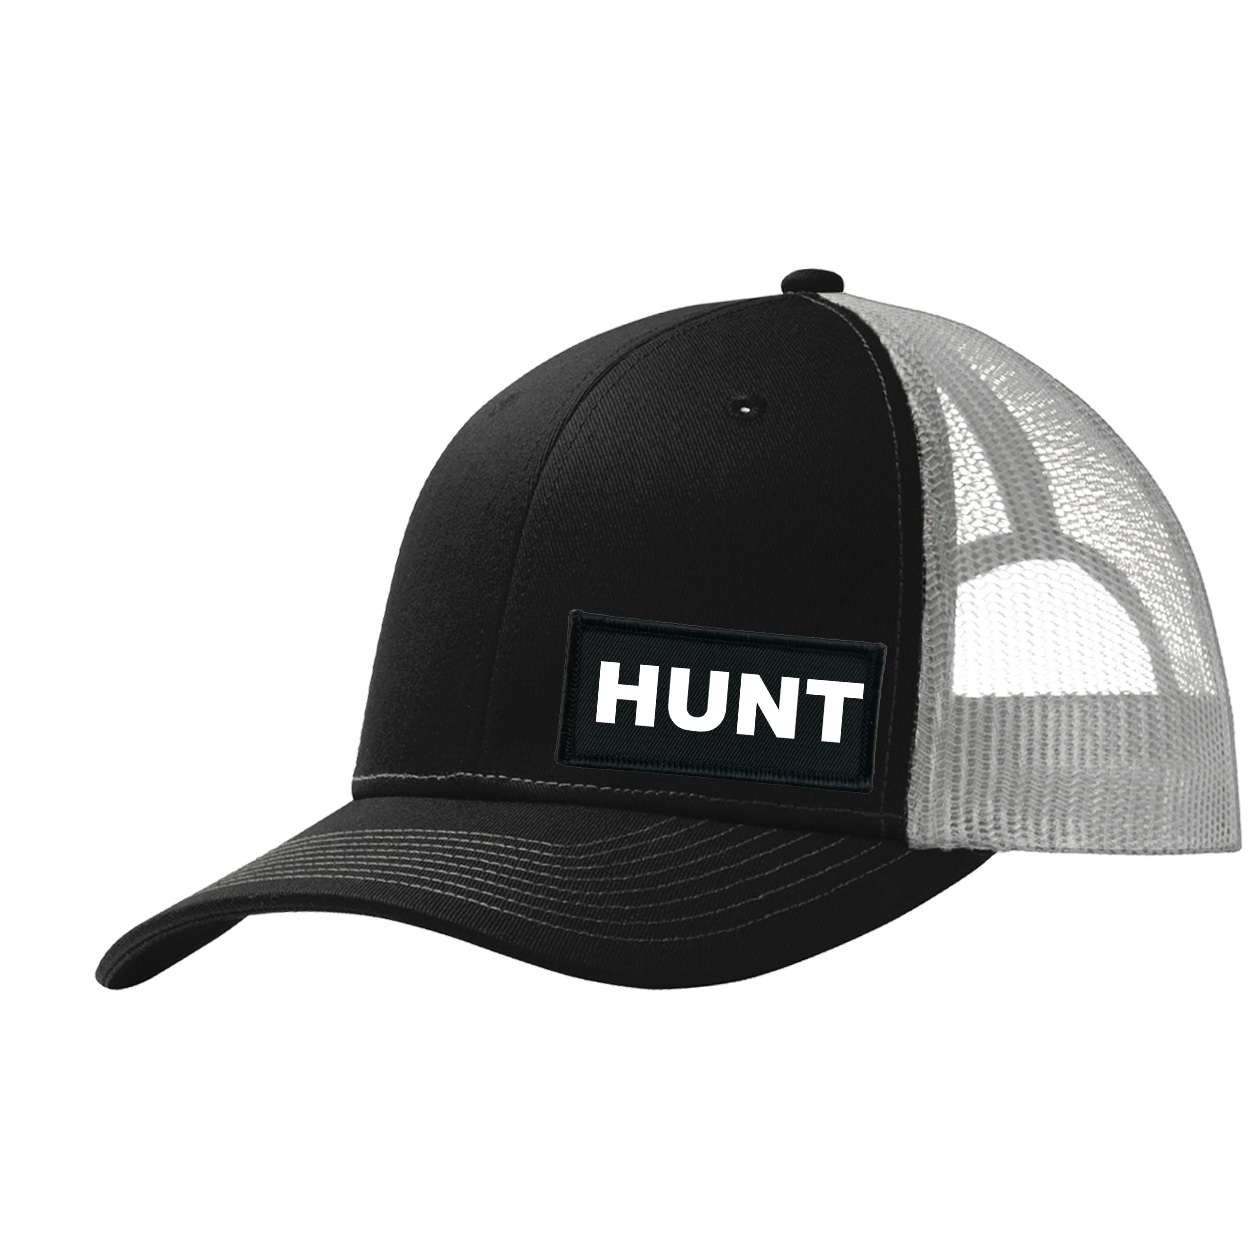 Hunt Brand Logo Night Out Woven Patch Snapback Trucker Hat Black/Gray